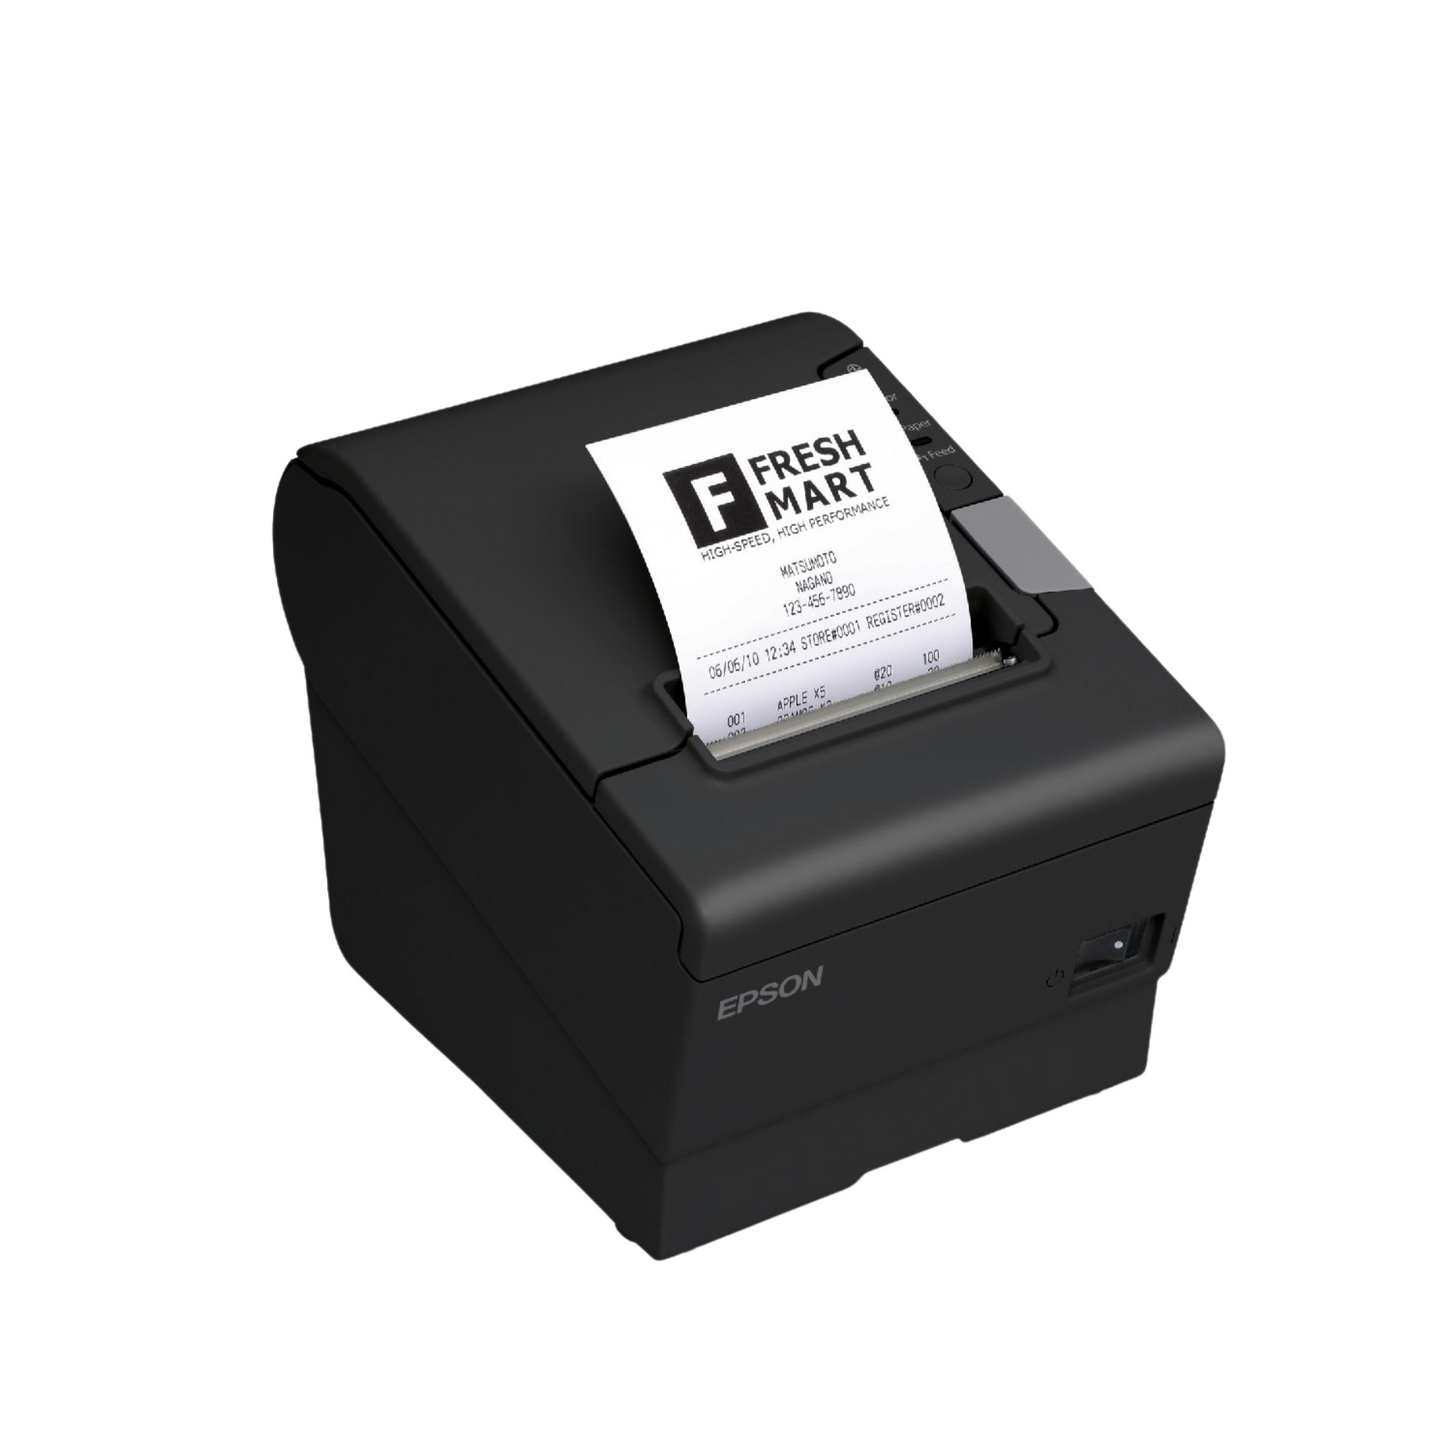 Epson TM T20III - Impresora de recibos - línea térmica Epson